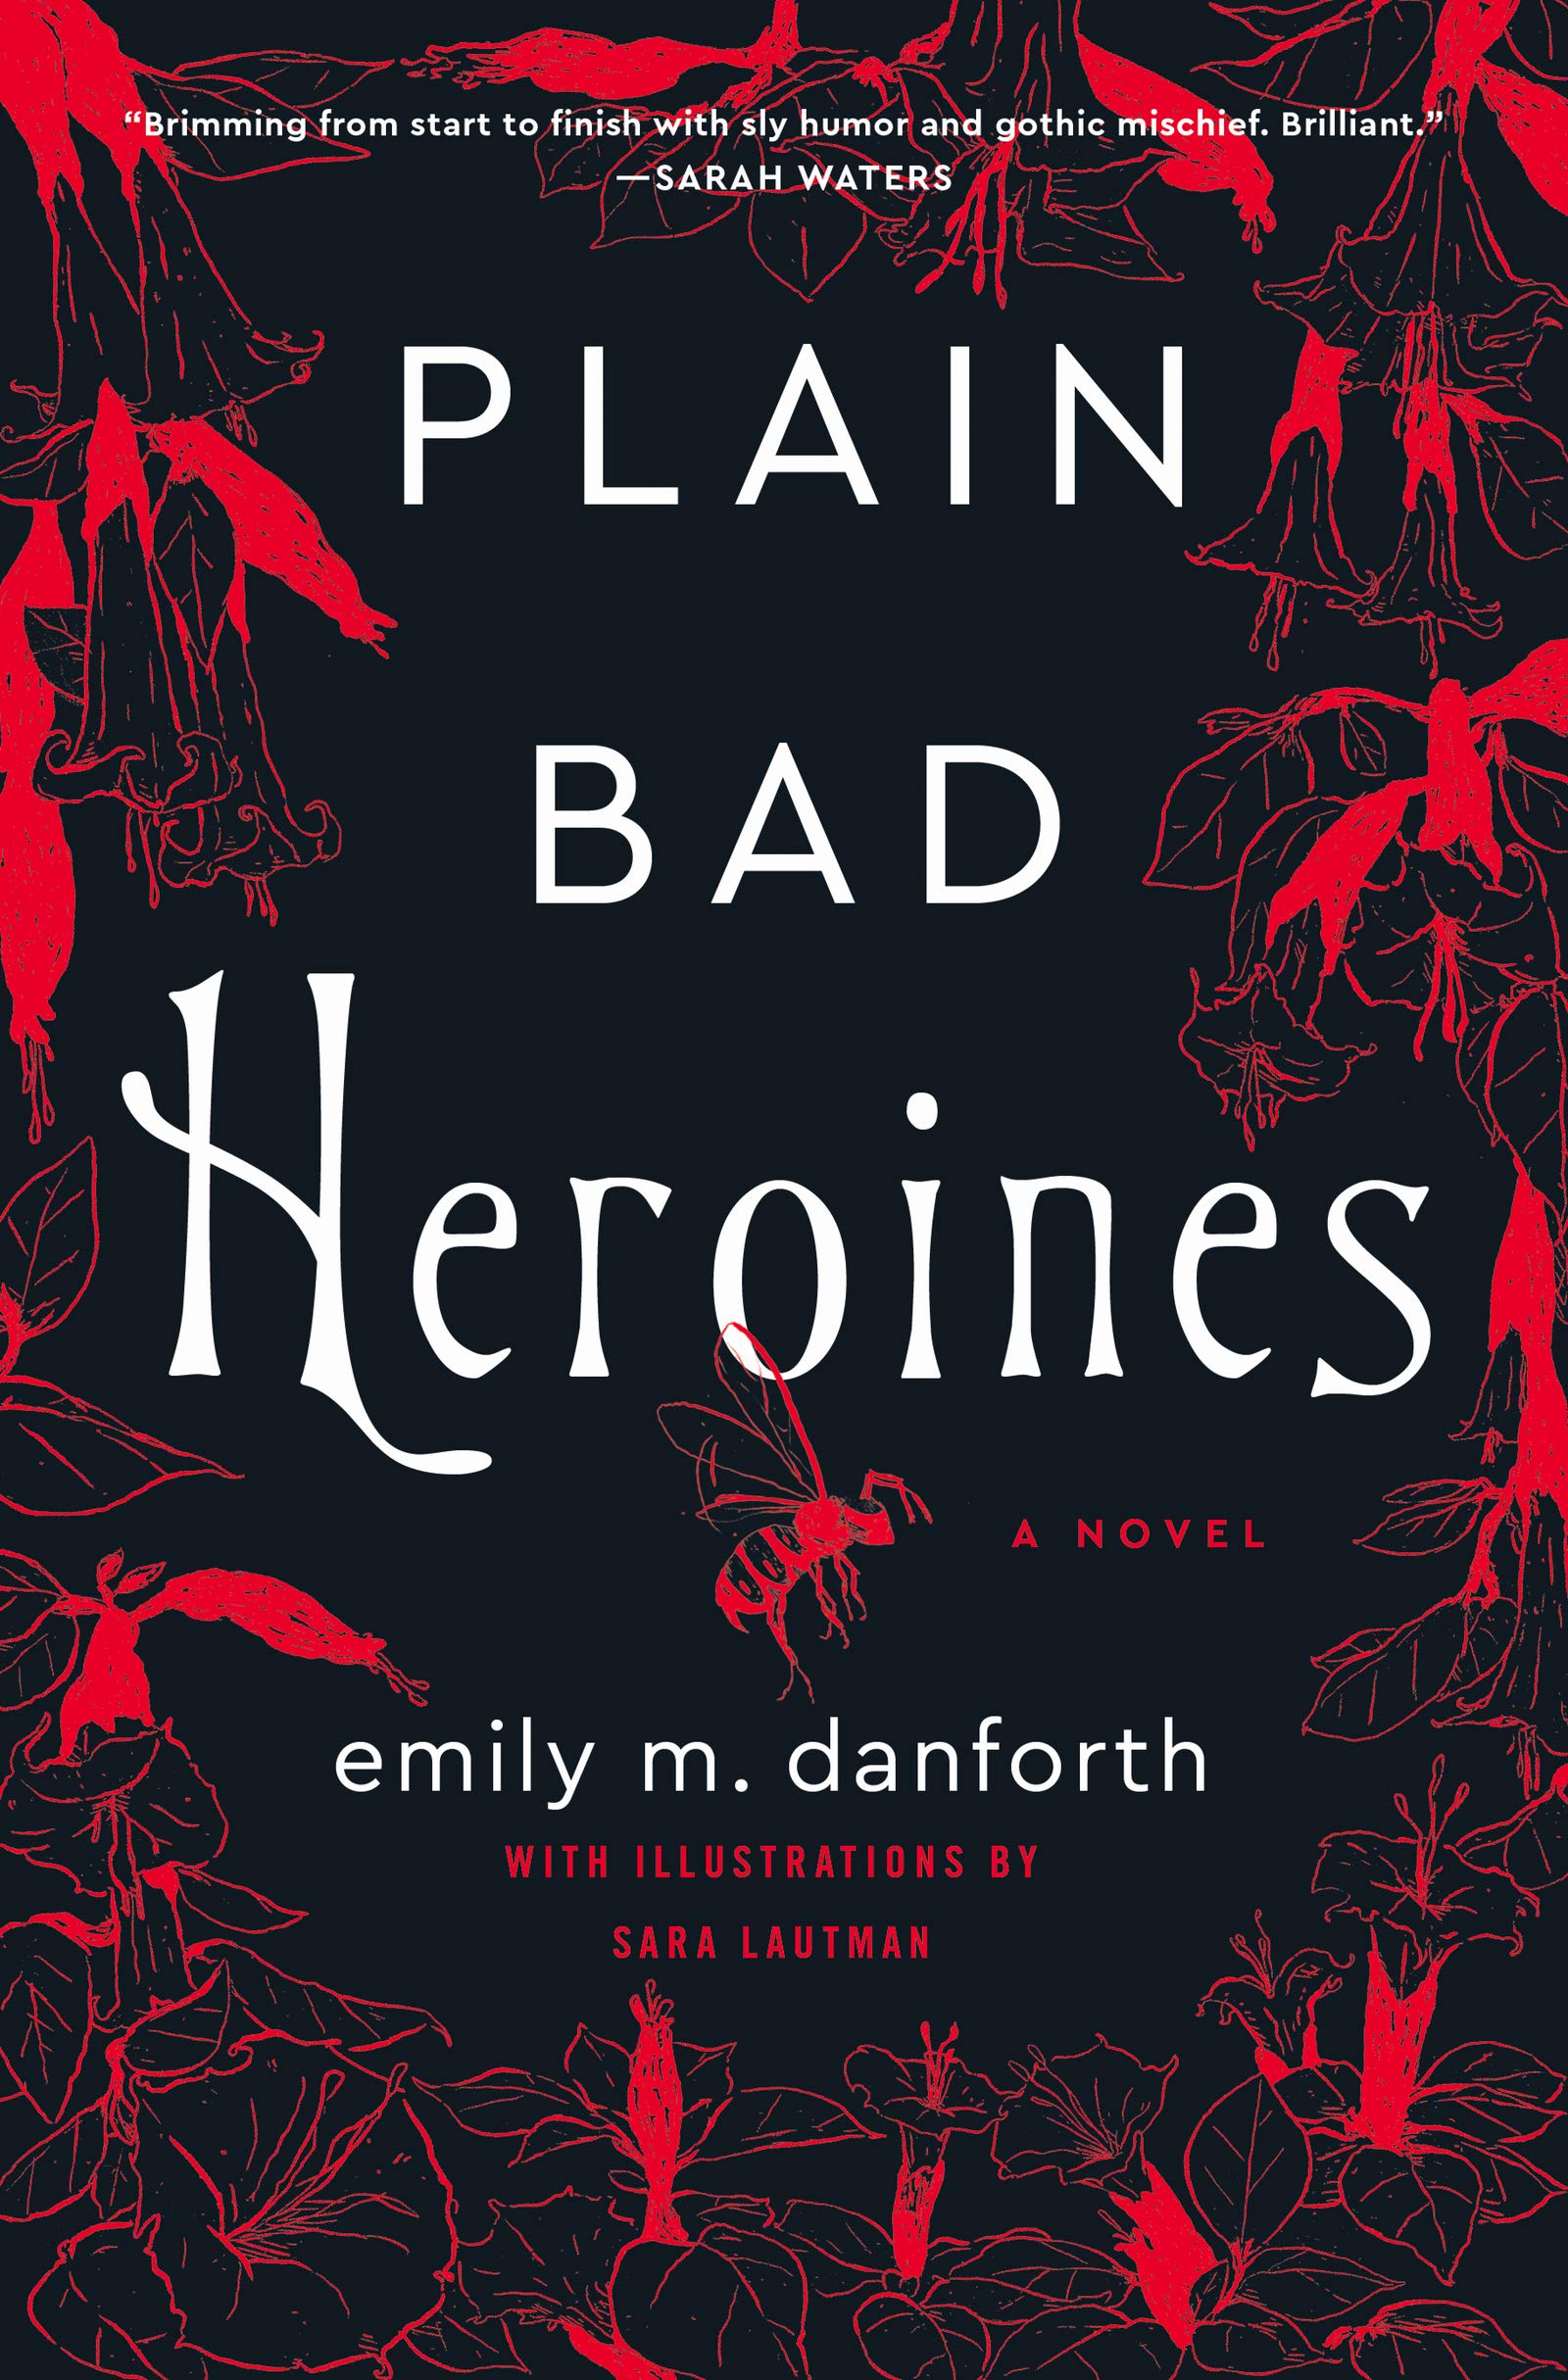 Book Review: Plain Bad Heroines - Belmont Public Library